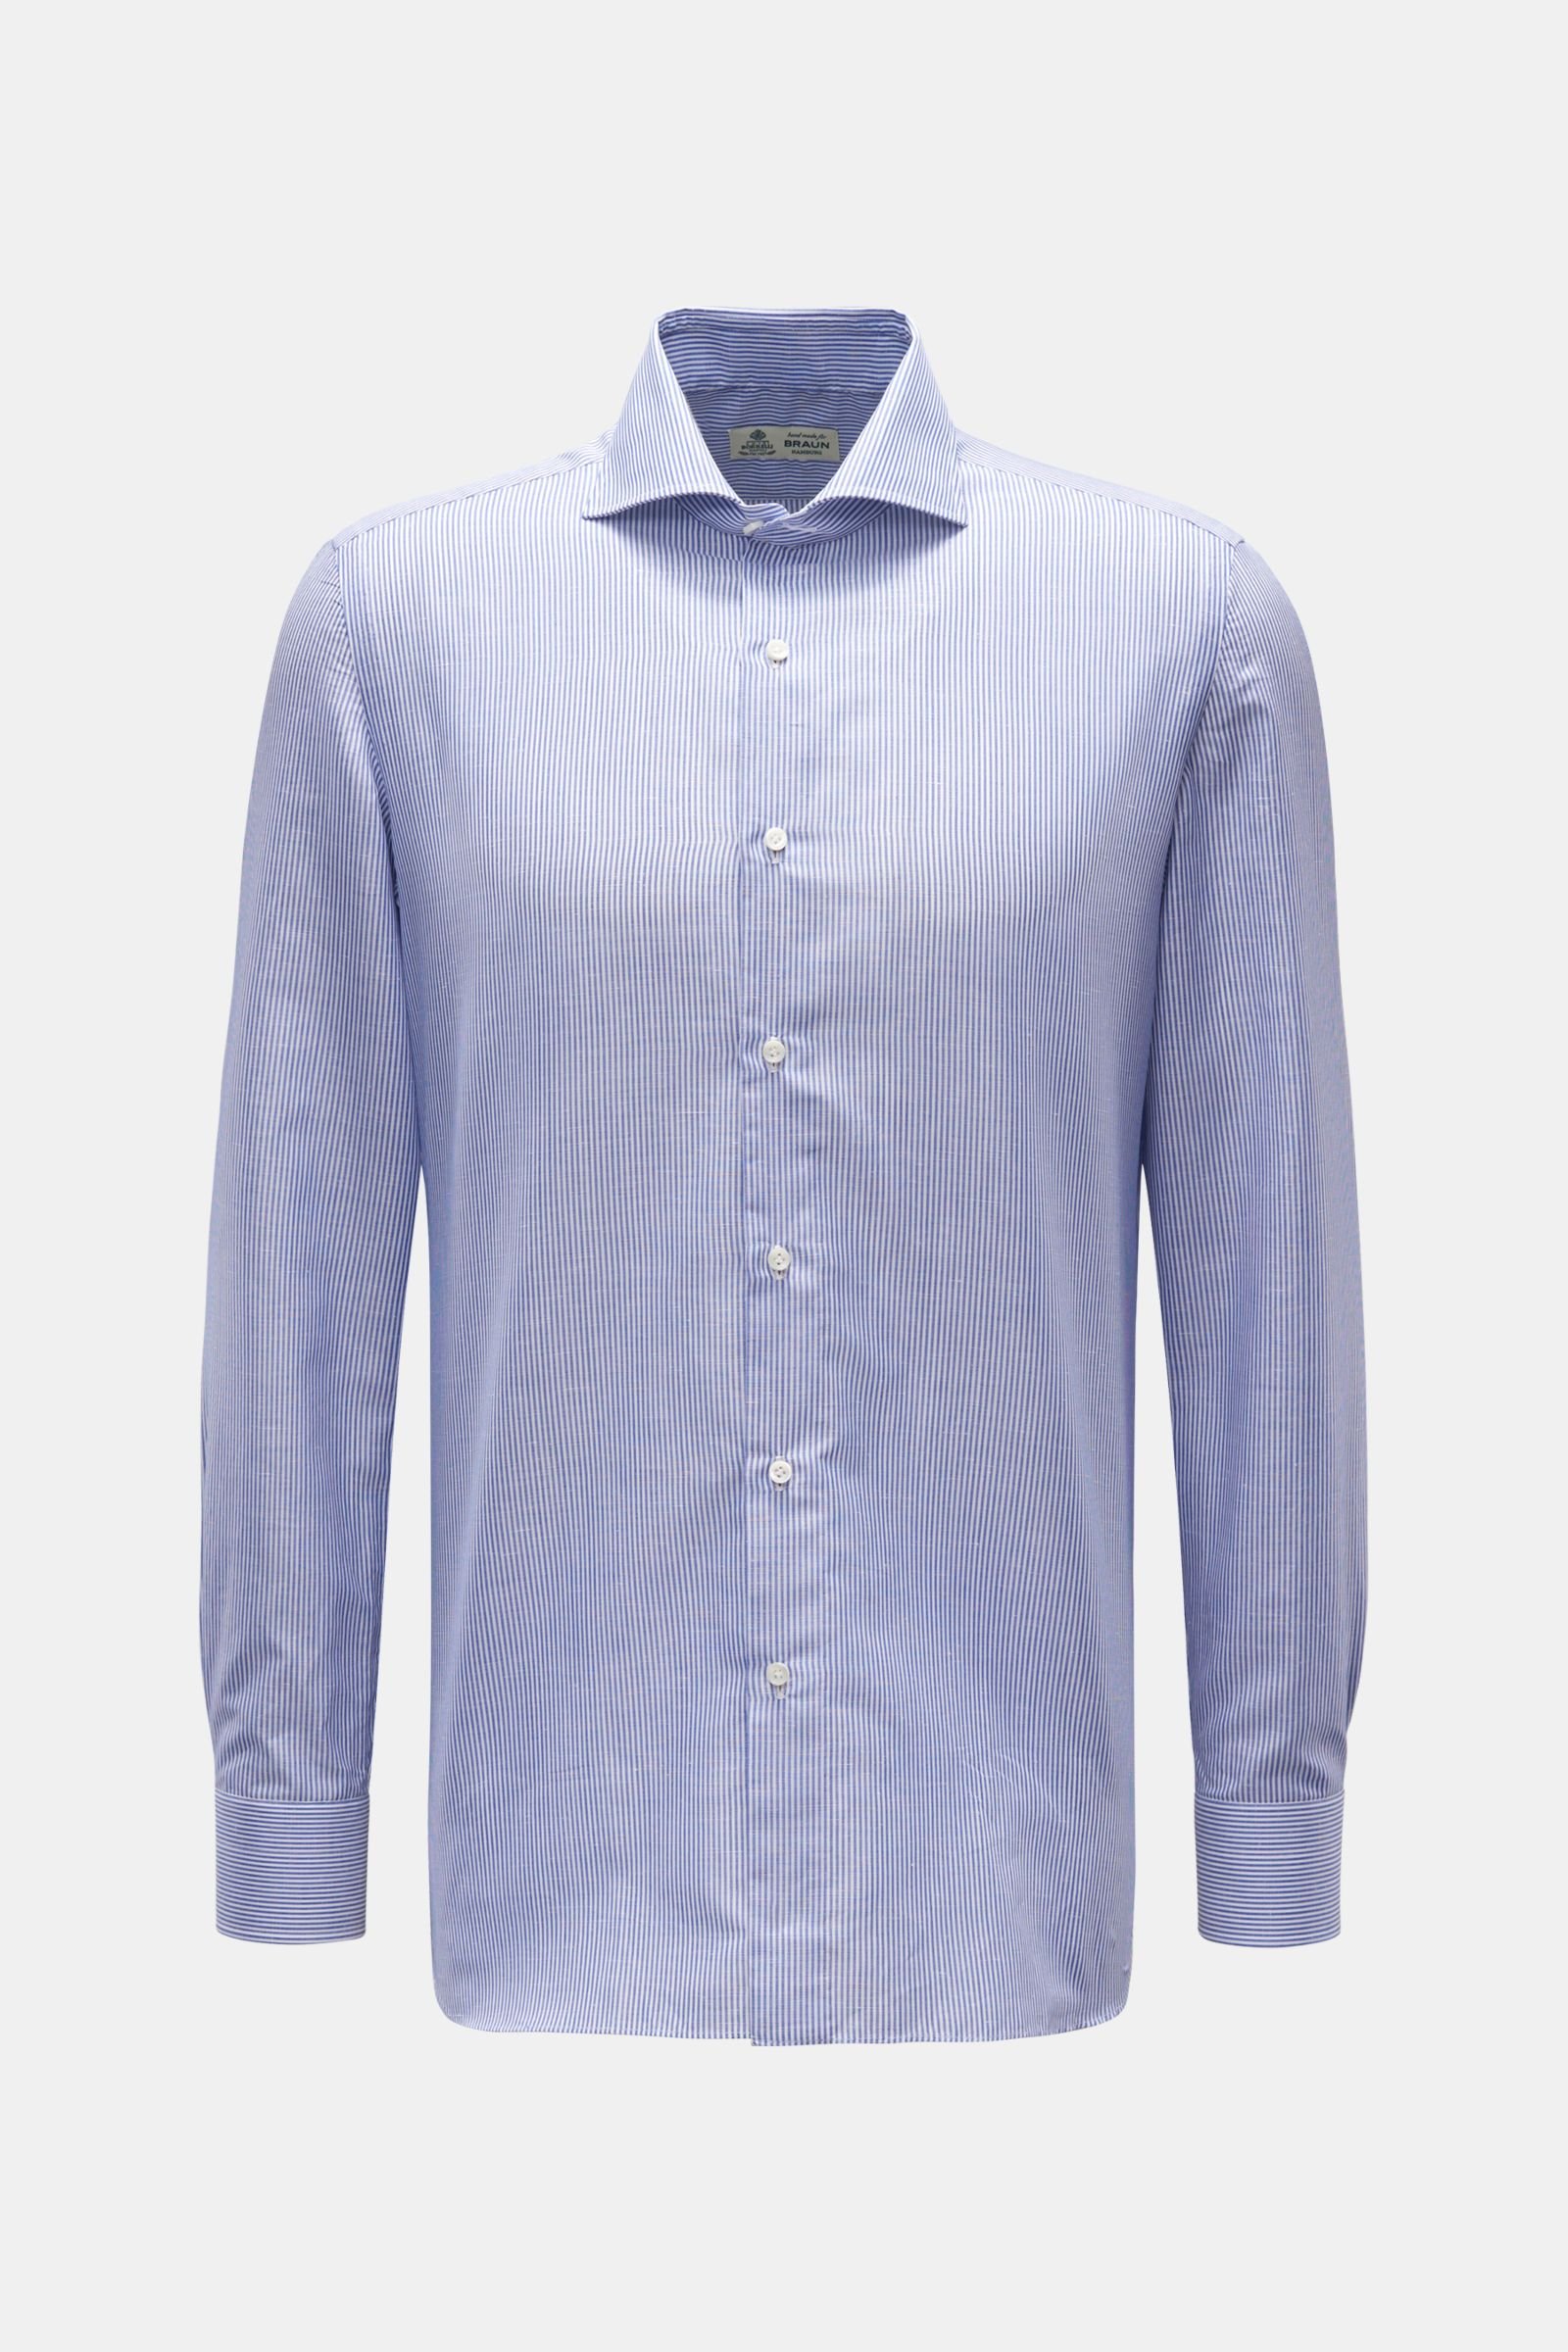 Business shirt 'Nando' shark collar grey-blue/white striped